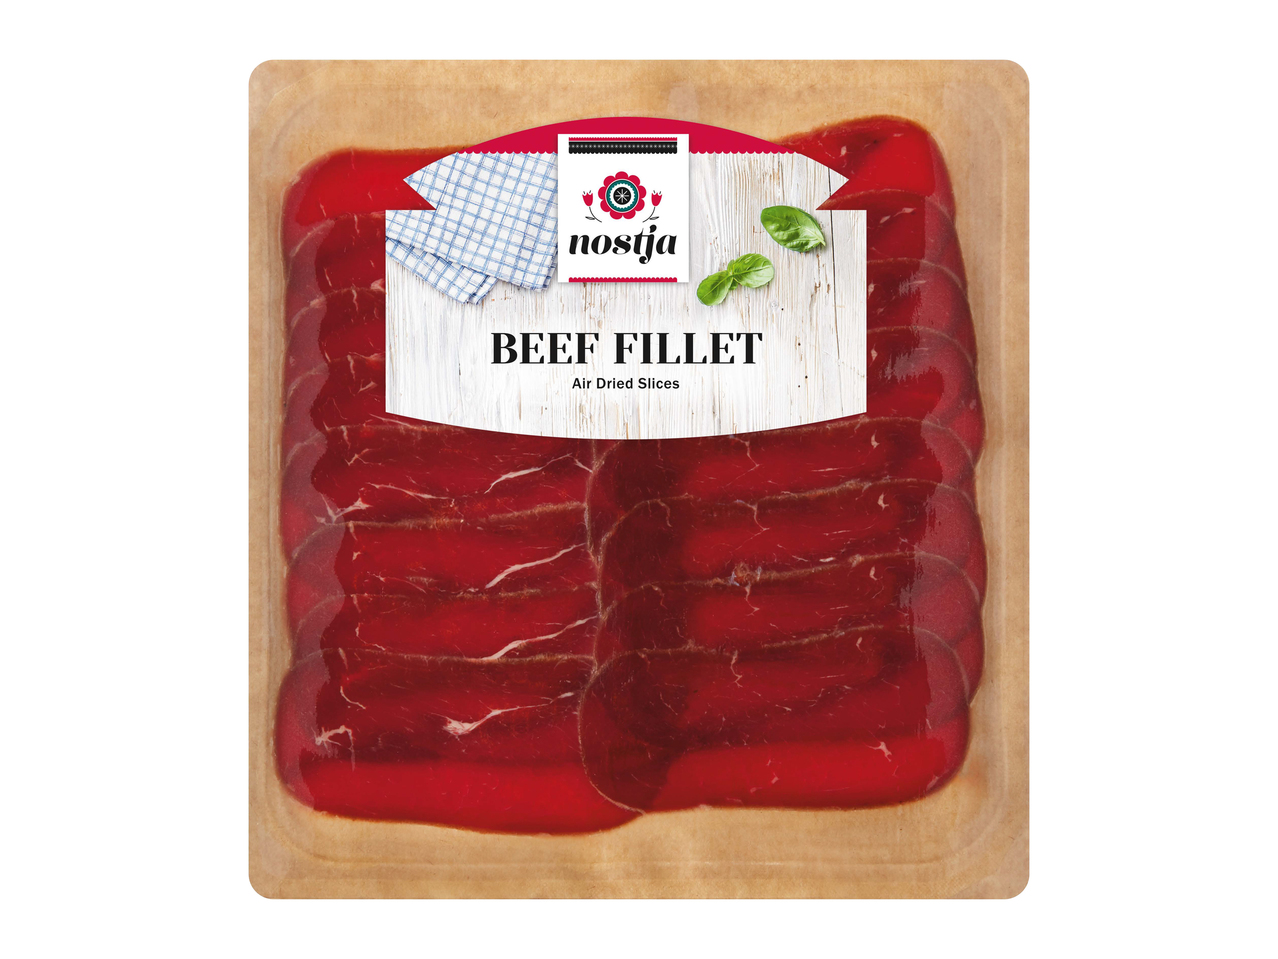 Beef fillet